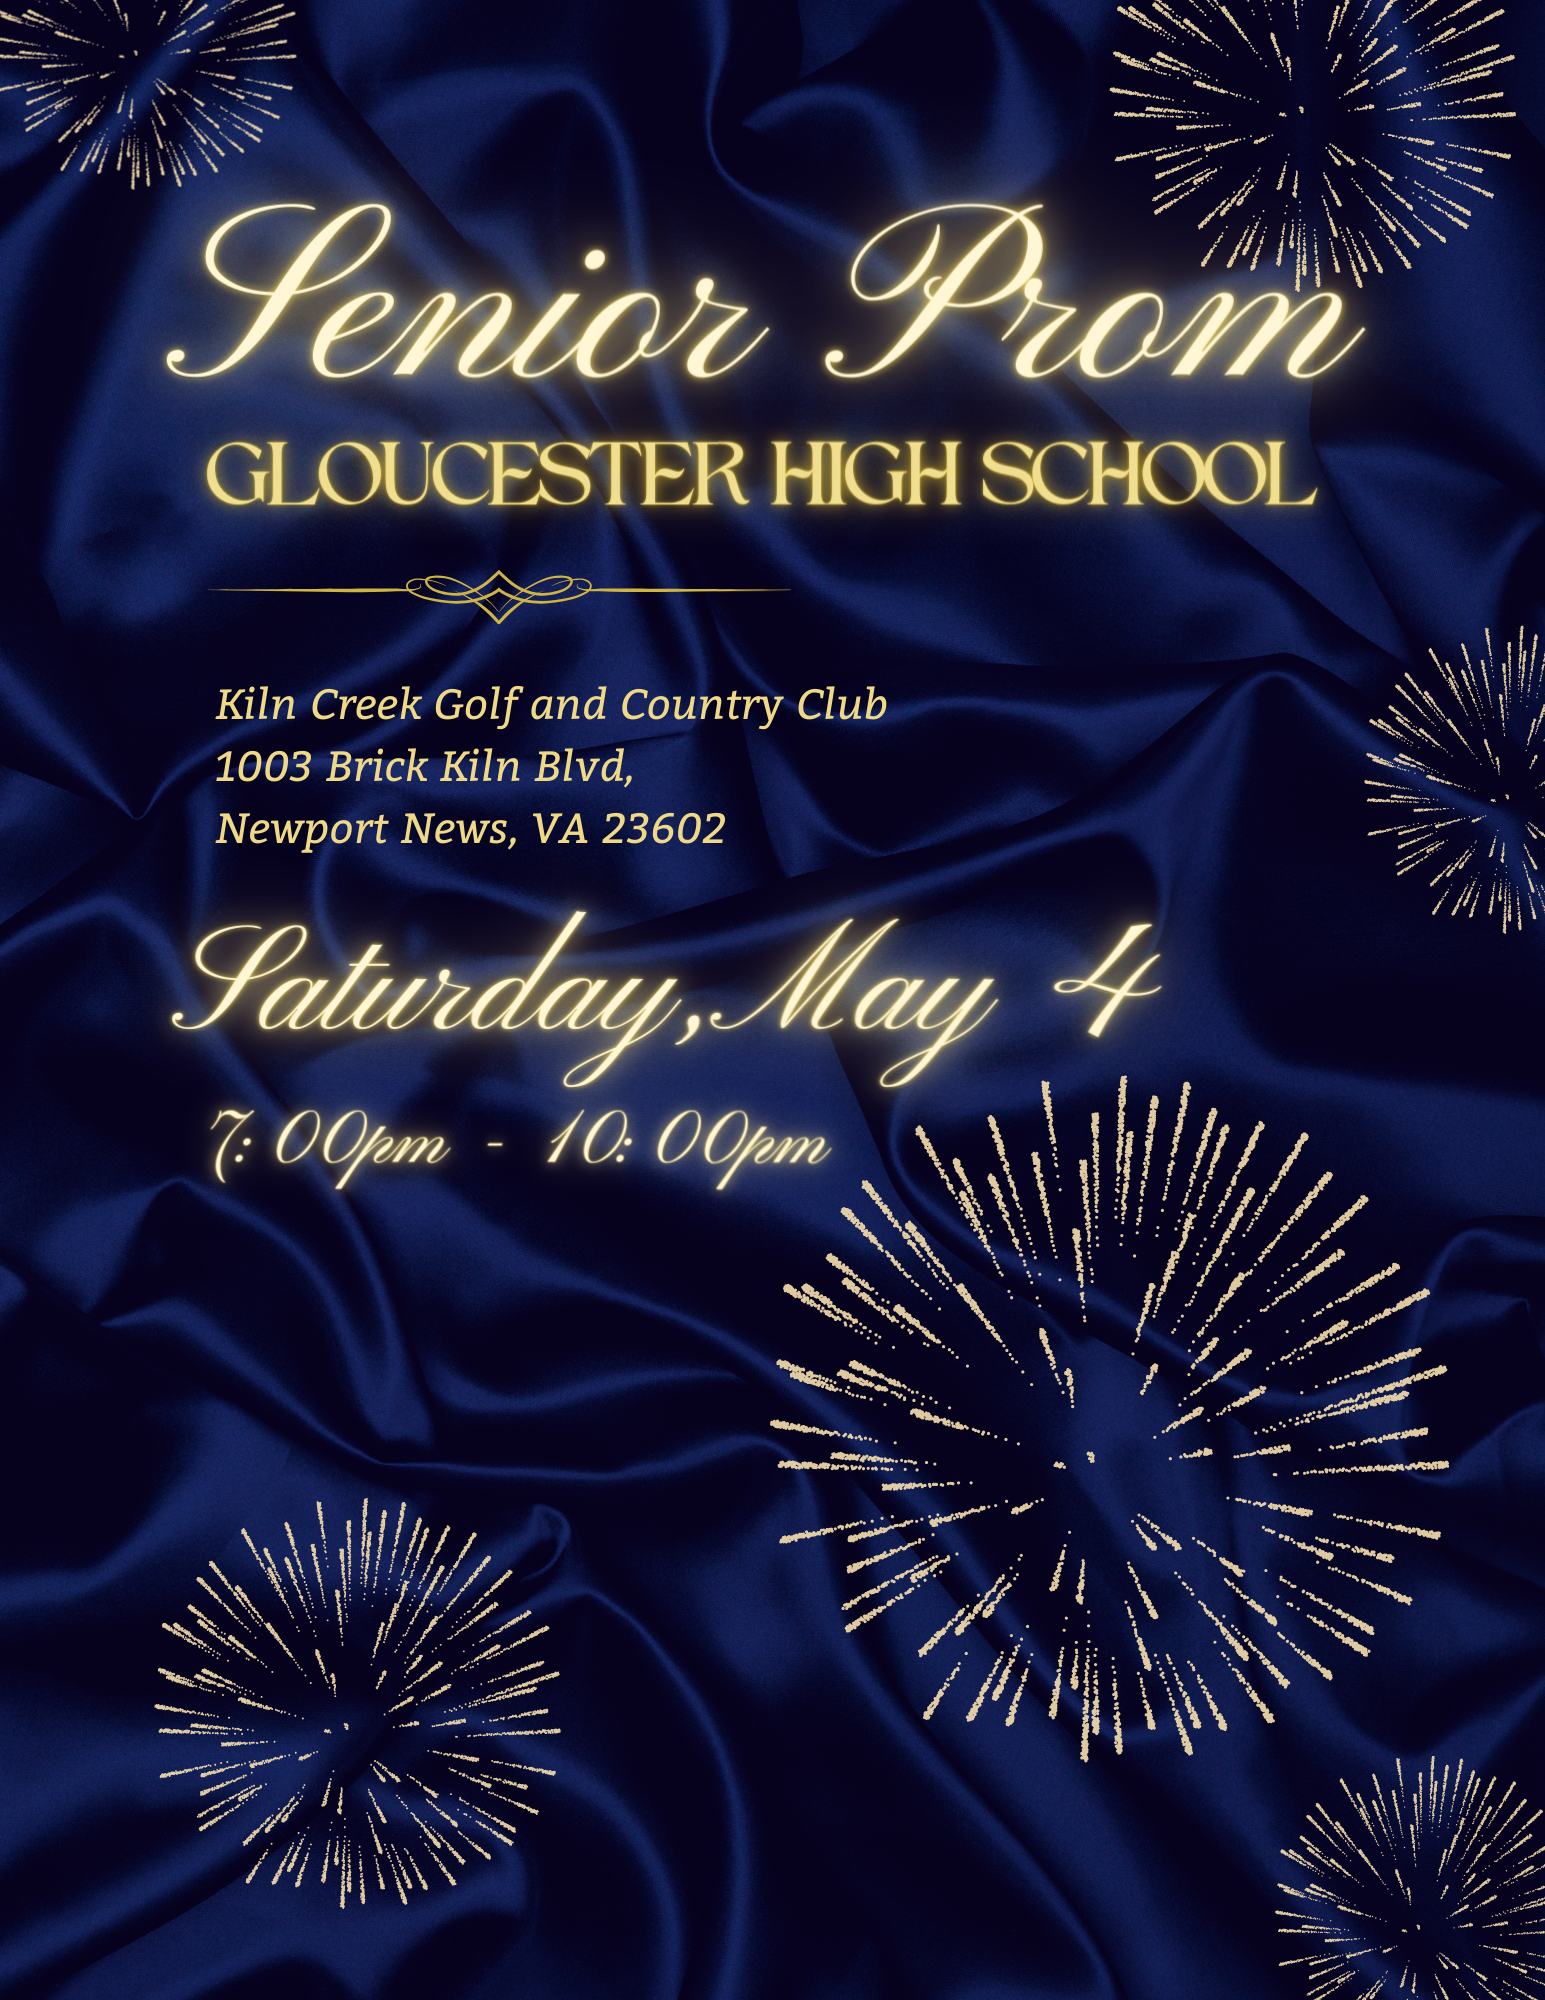 Senior Prom Details